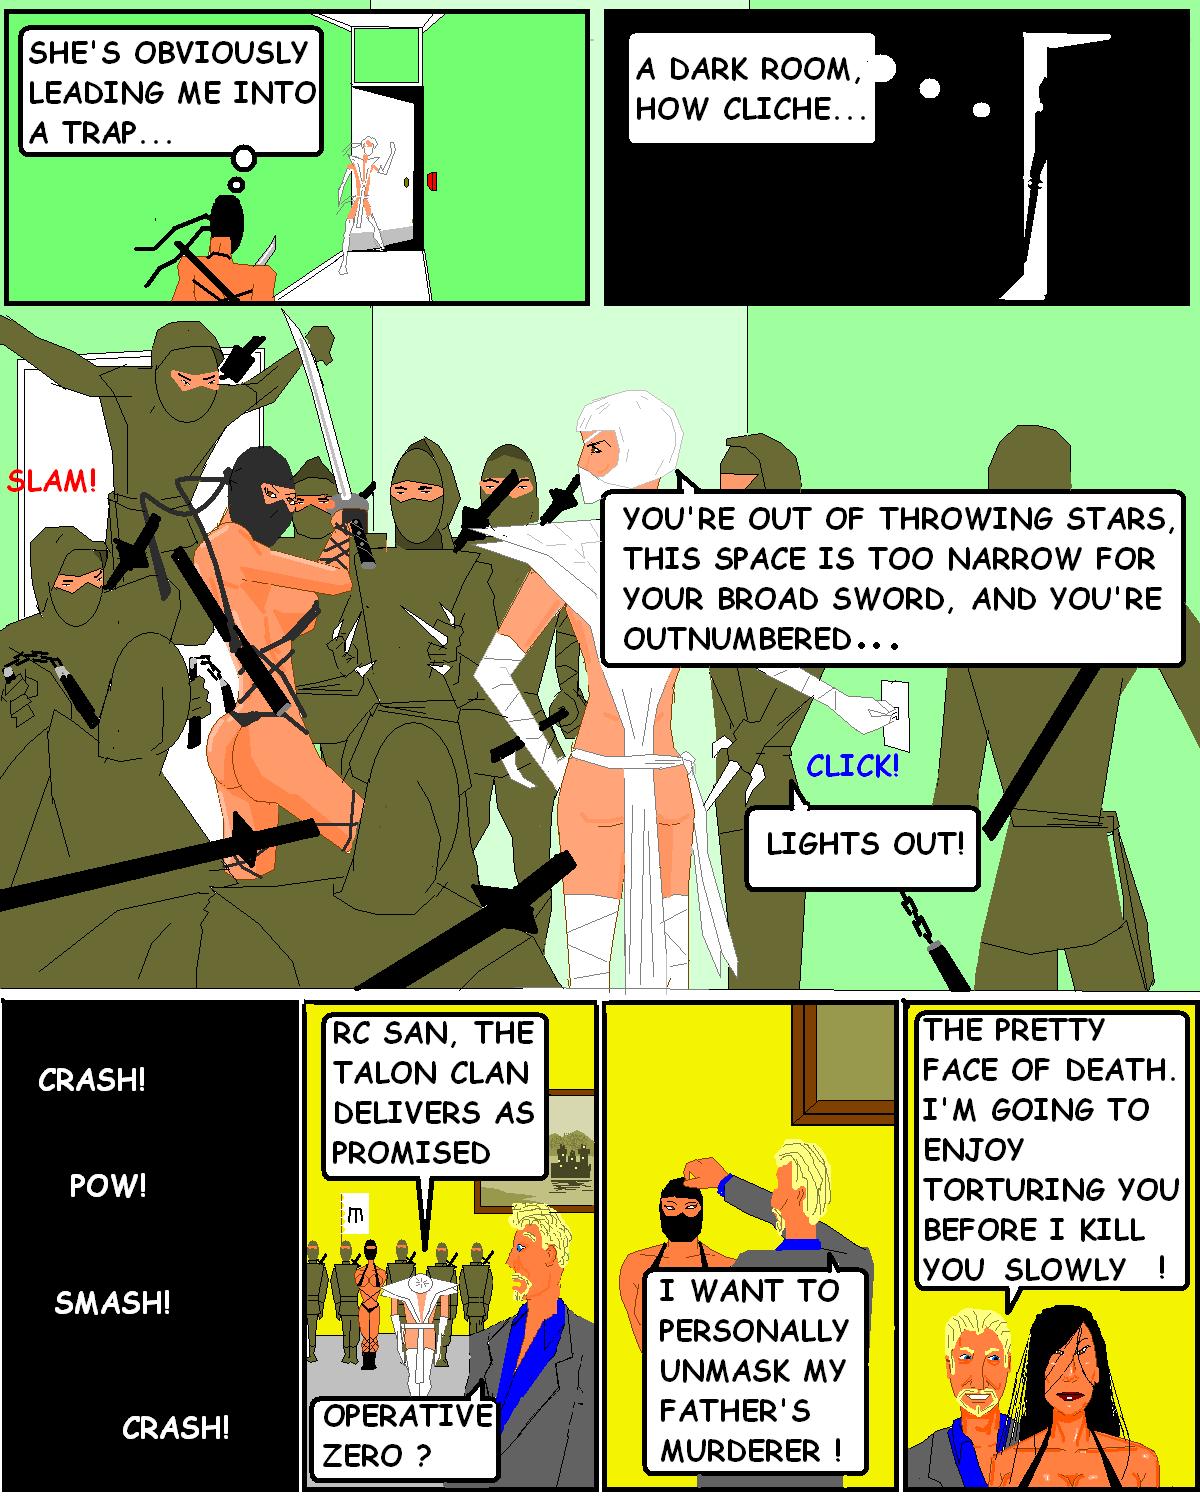 Operative Zero Comics 2 - Part 3 - Page 6